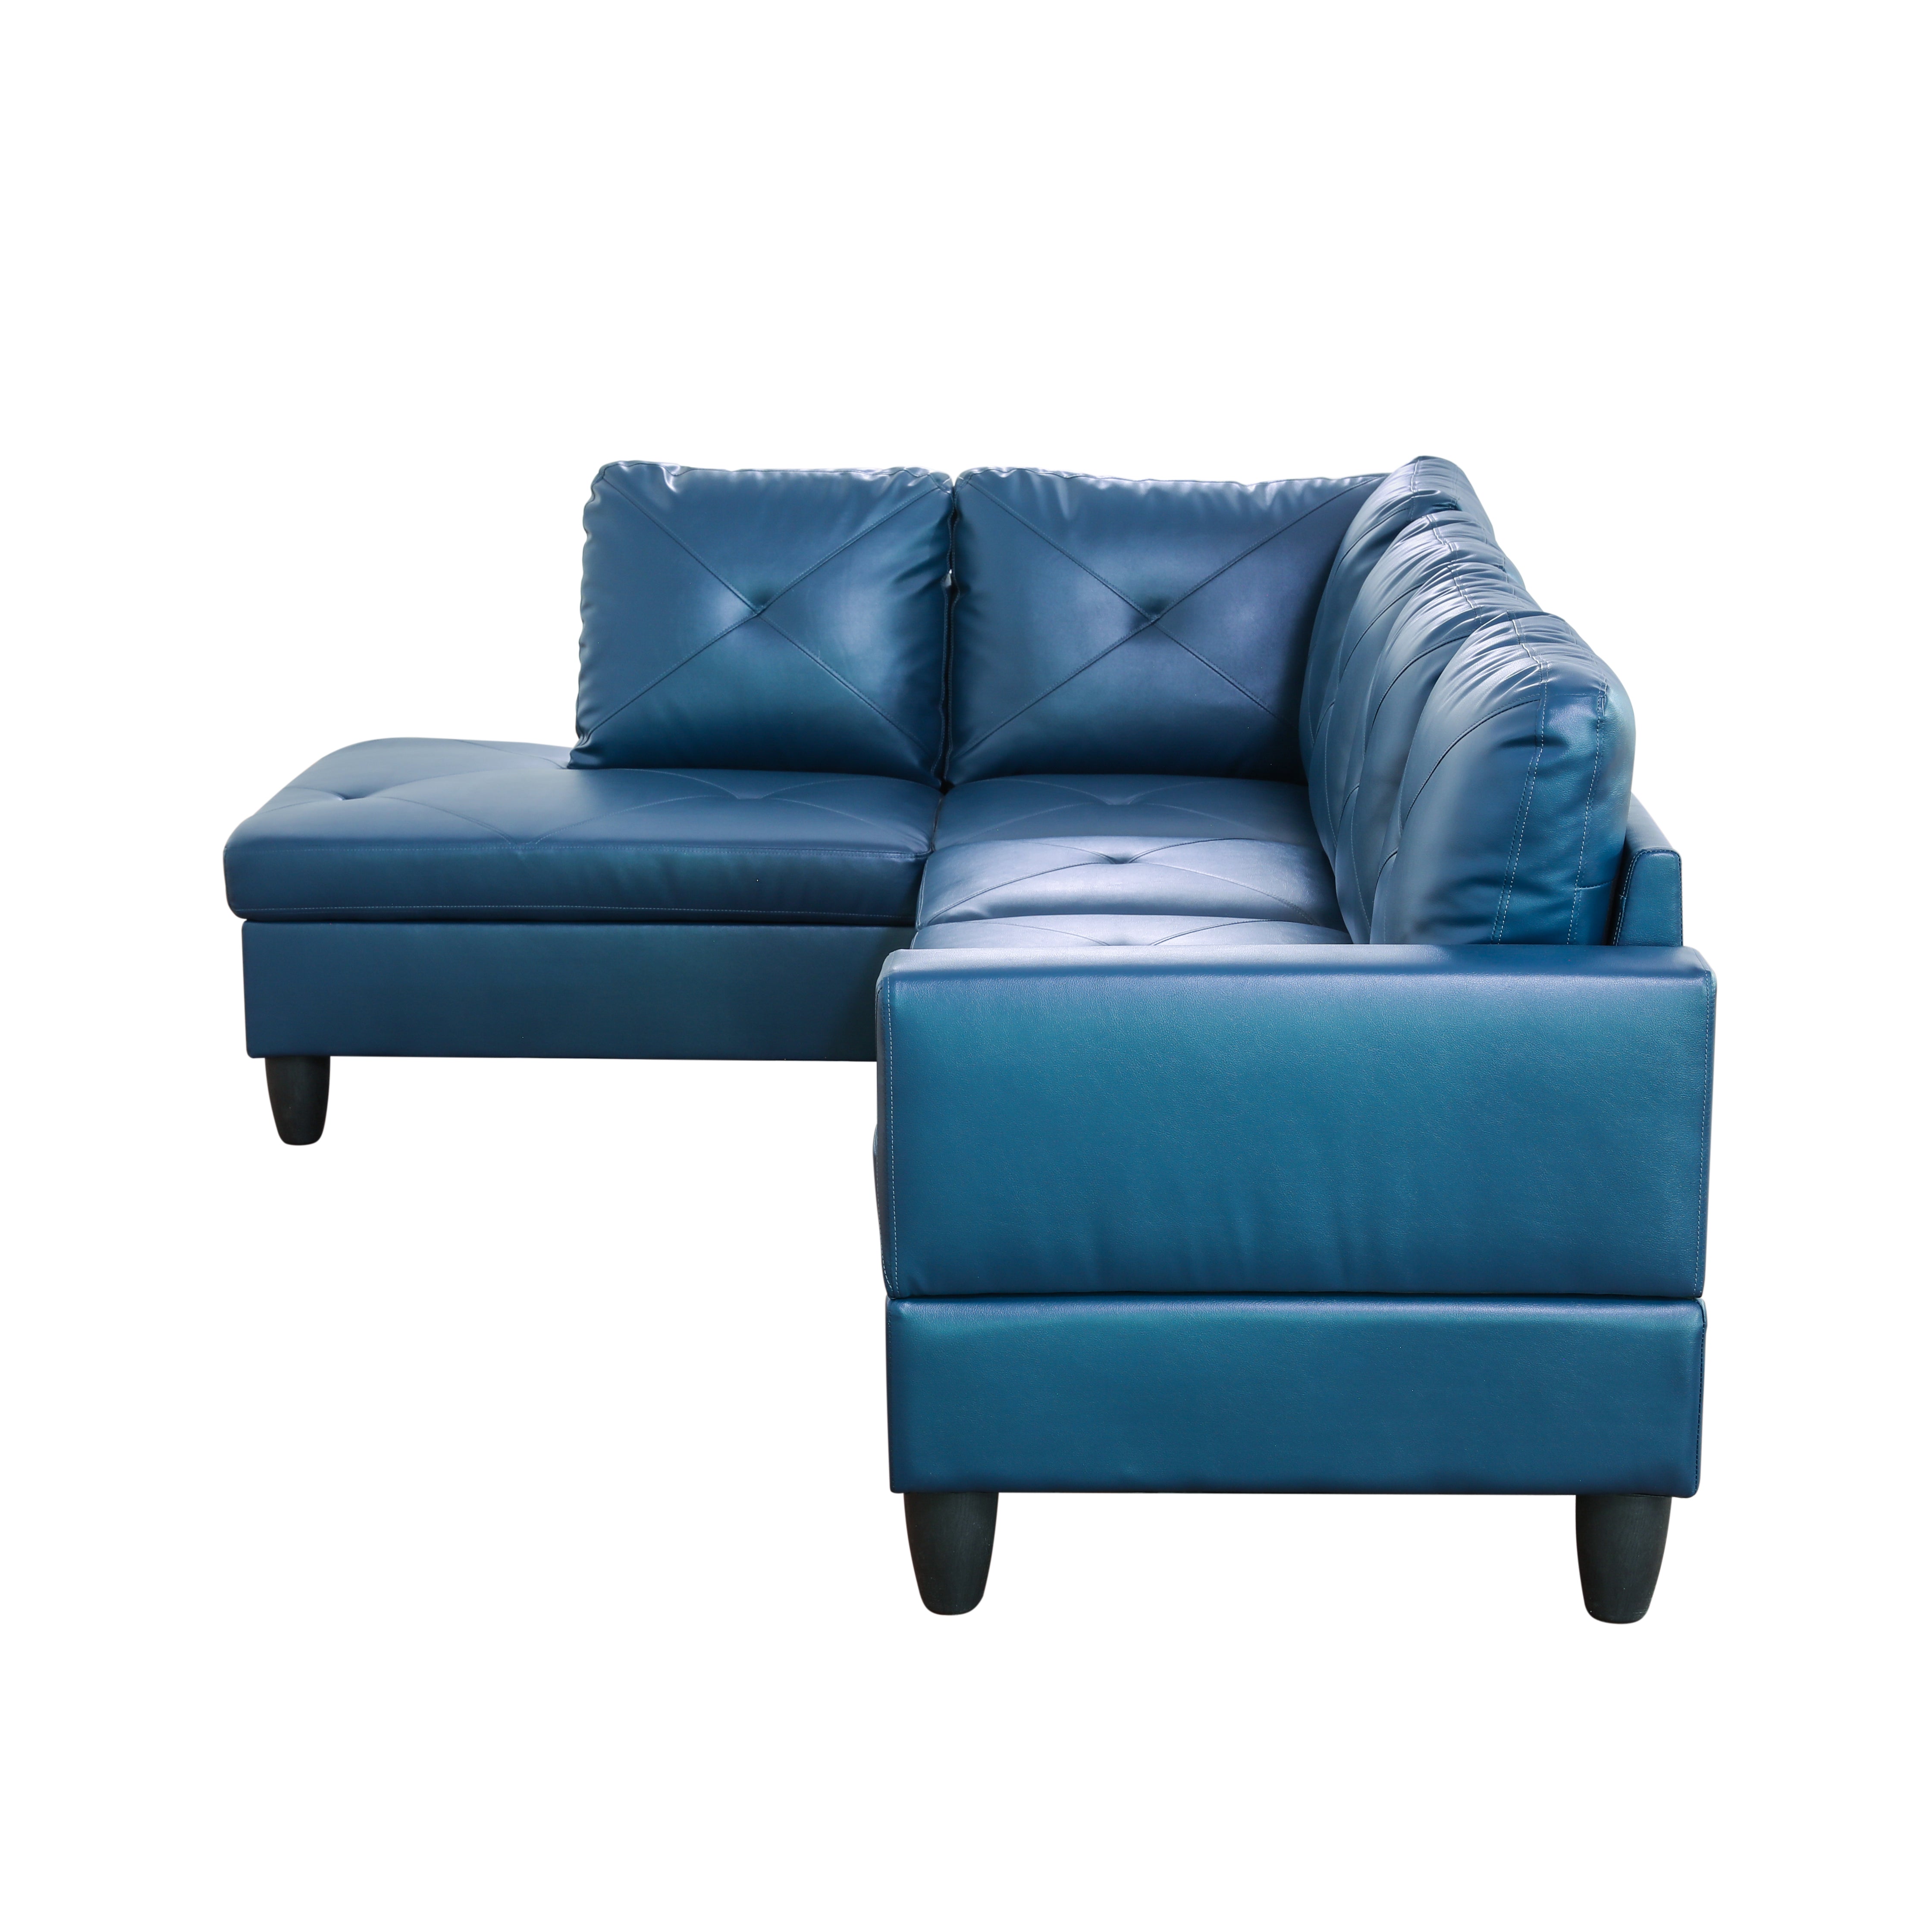 Ainehome Denim L-Shaped Faux Leather Sofa Set